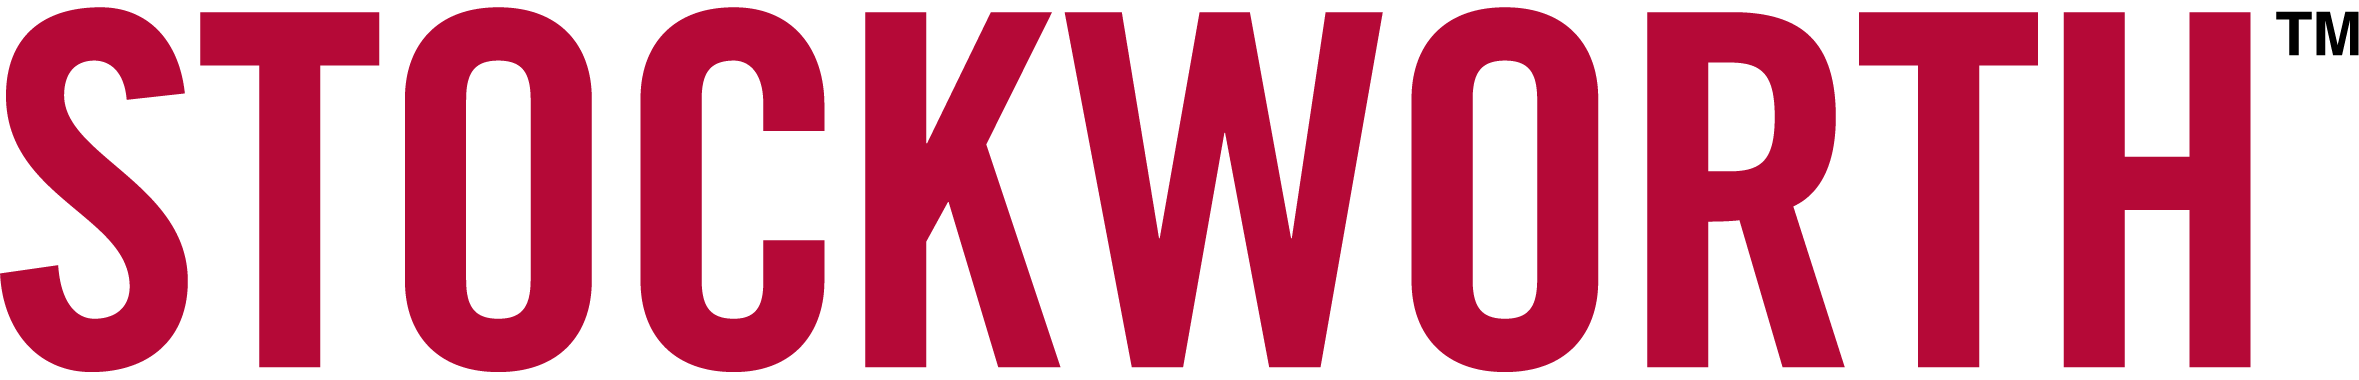 Stockworth Logo